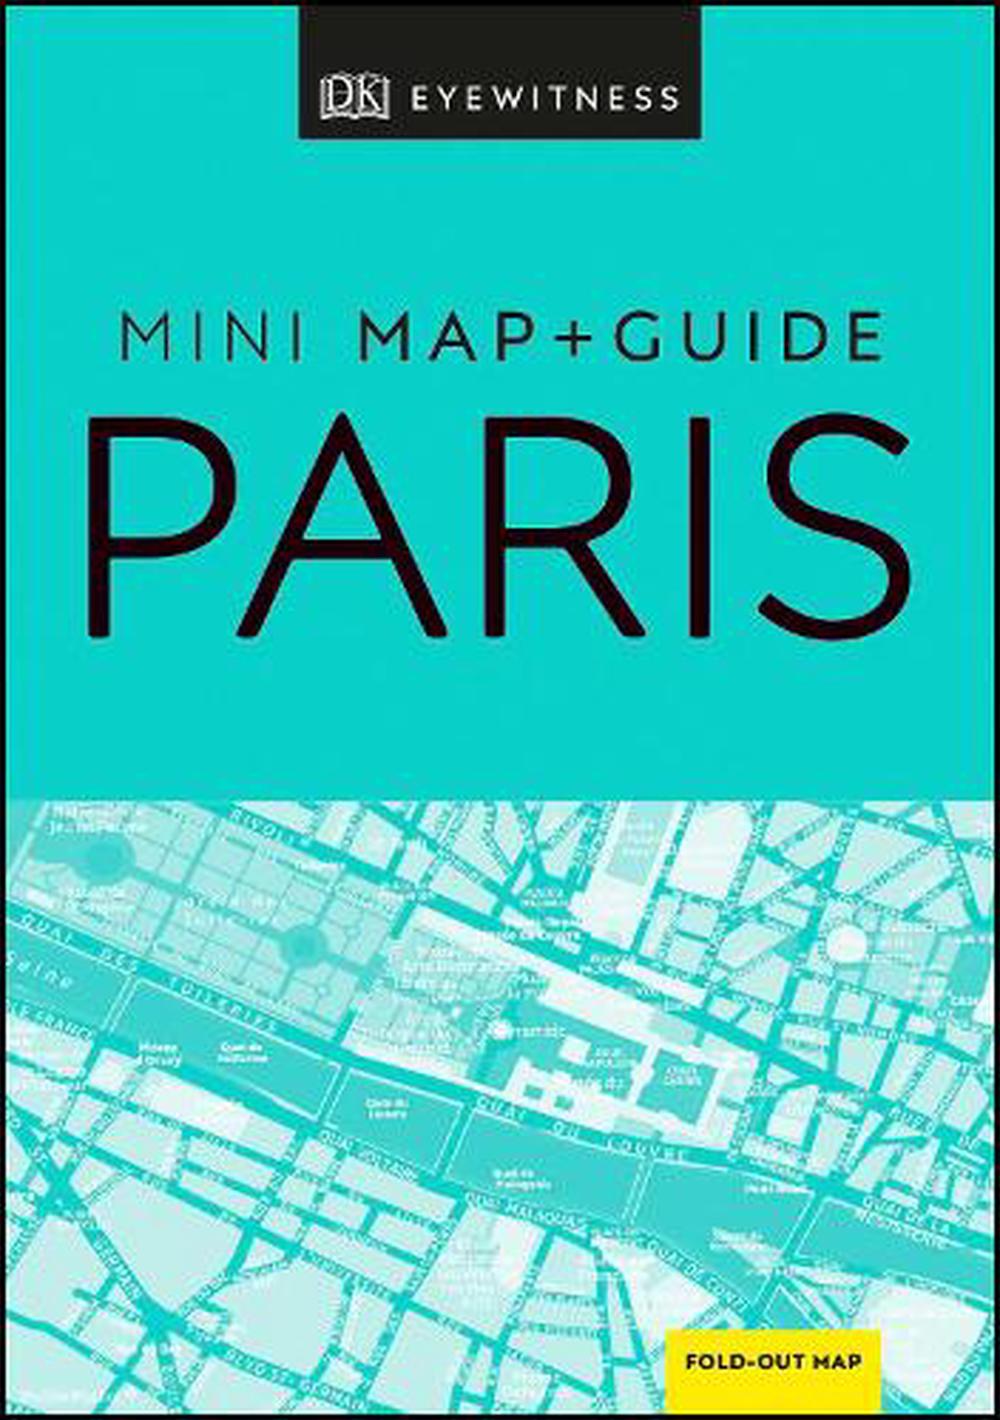 Map　online　and　DK　The　by　Paris　Eyewitness,　Paperback,　9780241397756　Eyewitness　at　Nile　Mini　DK　Guide　Buy